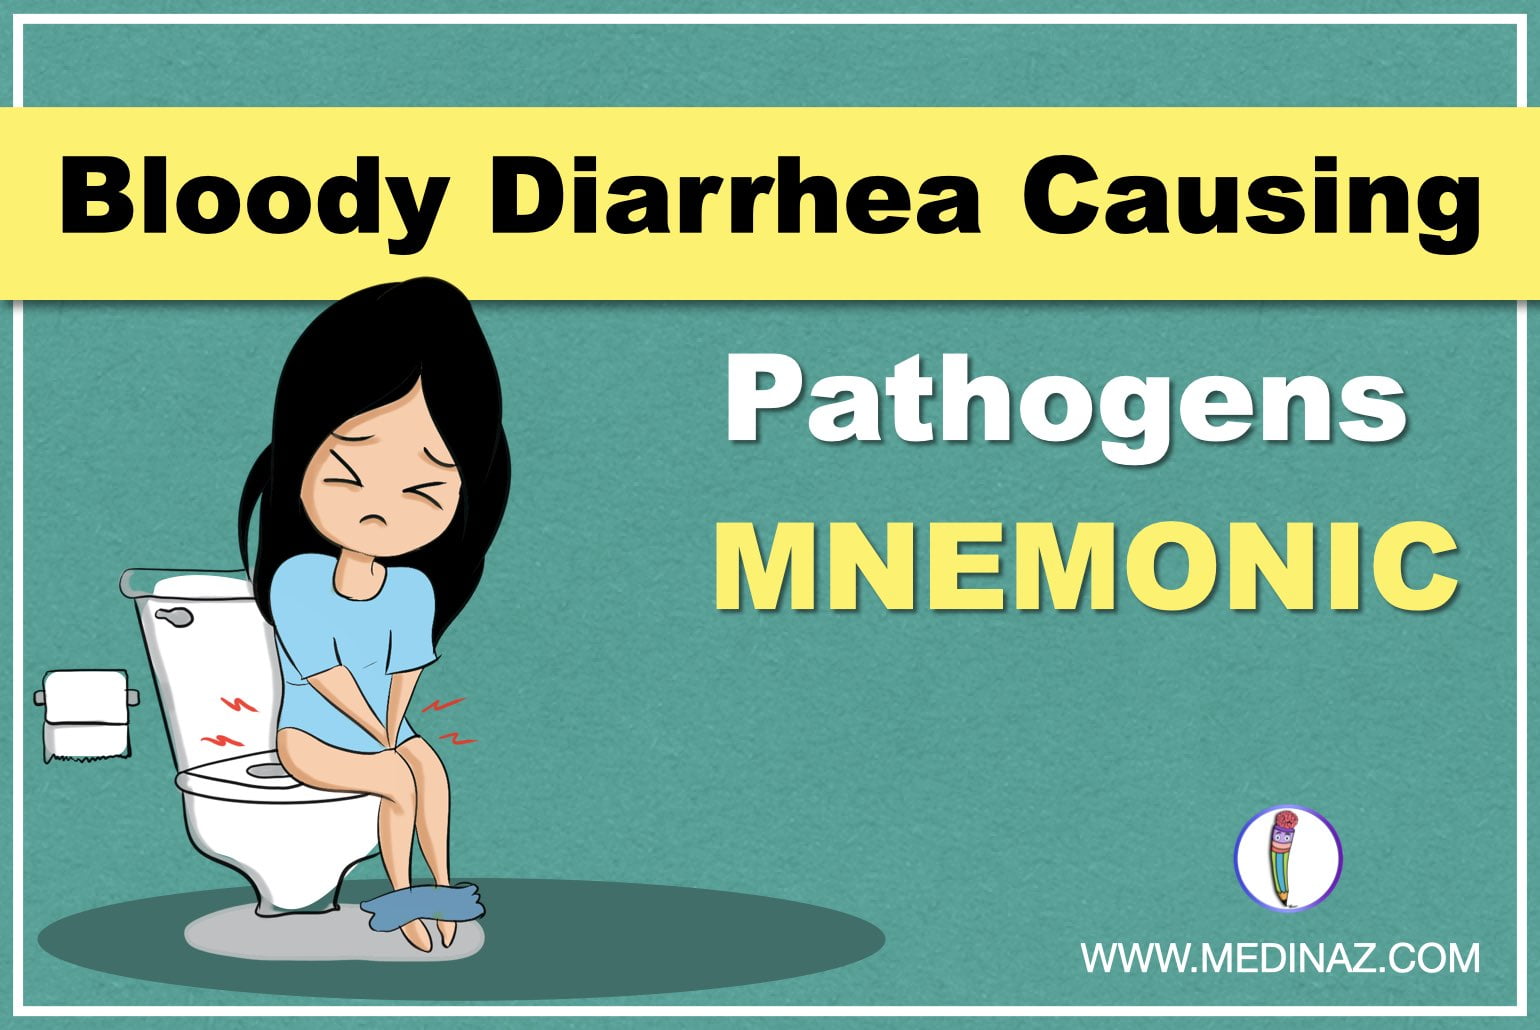 Bloody Diarrhea Causing Pathogens